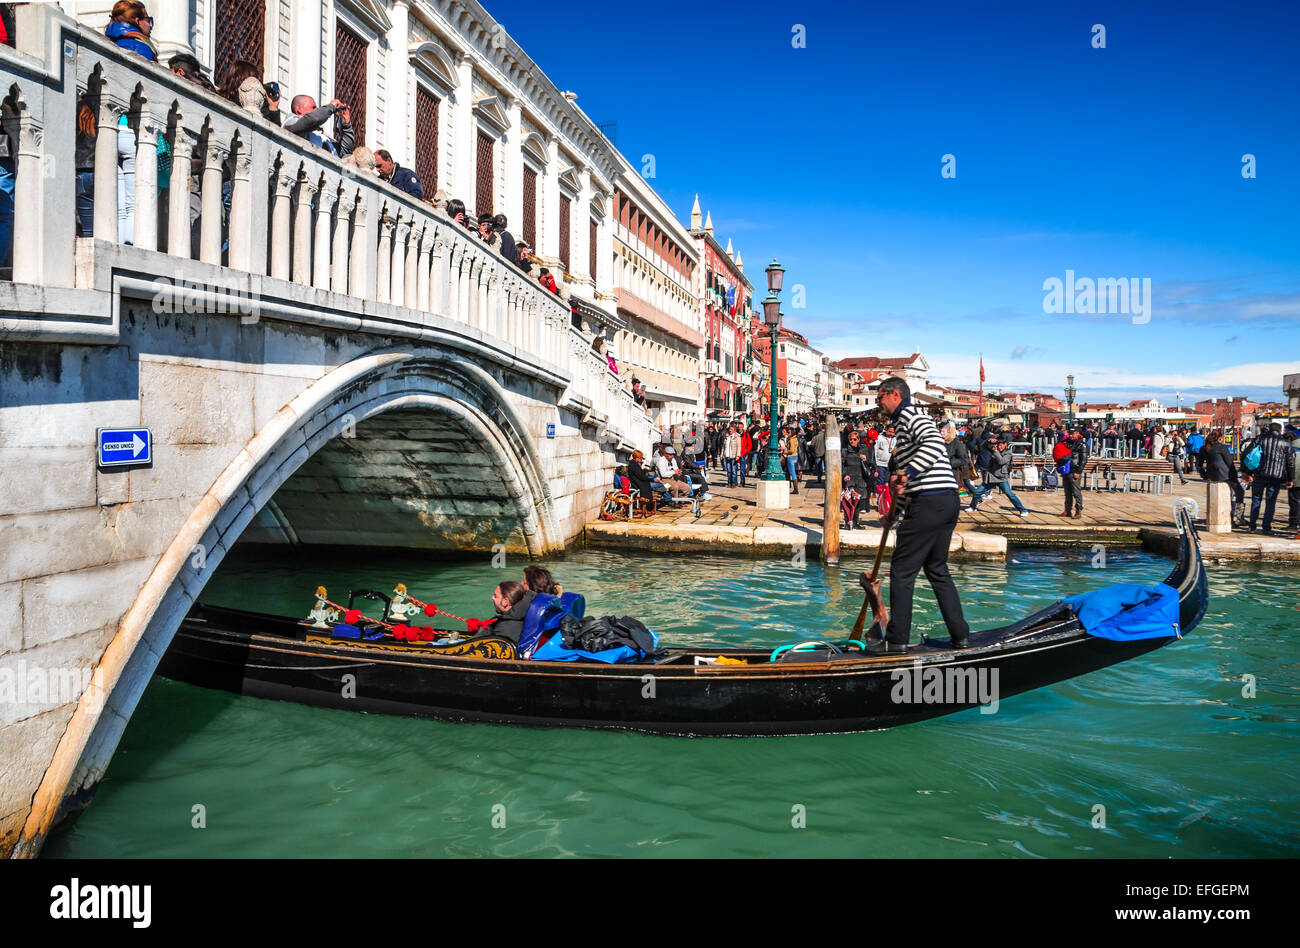 Venice, Italy. Image with Gondolas on Piazza San Marco. This is Venice lagoon international landmark of Italy. Stock Photo